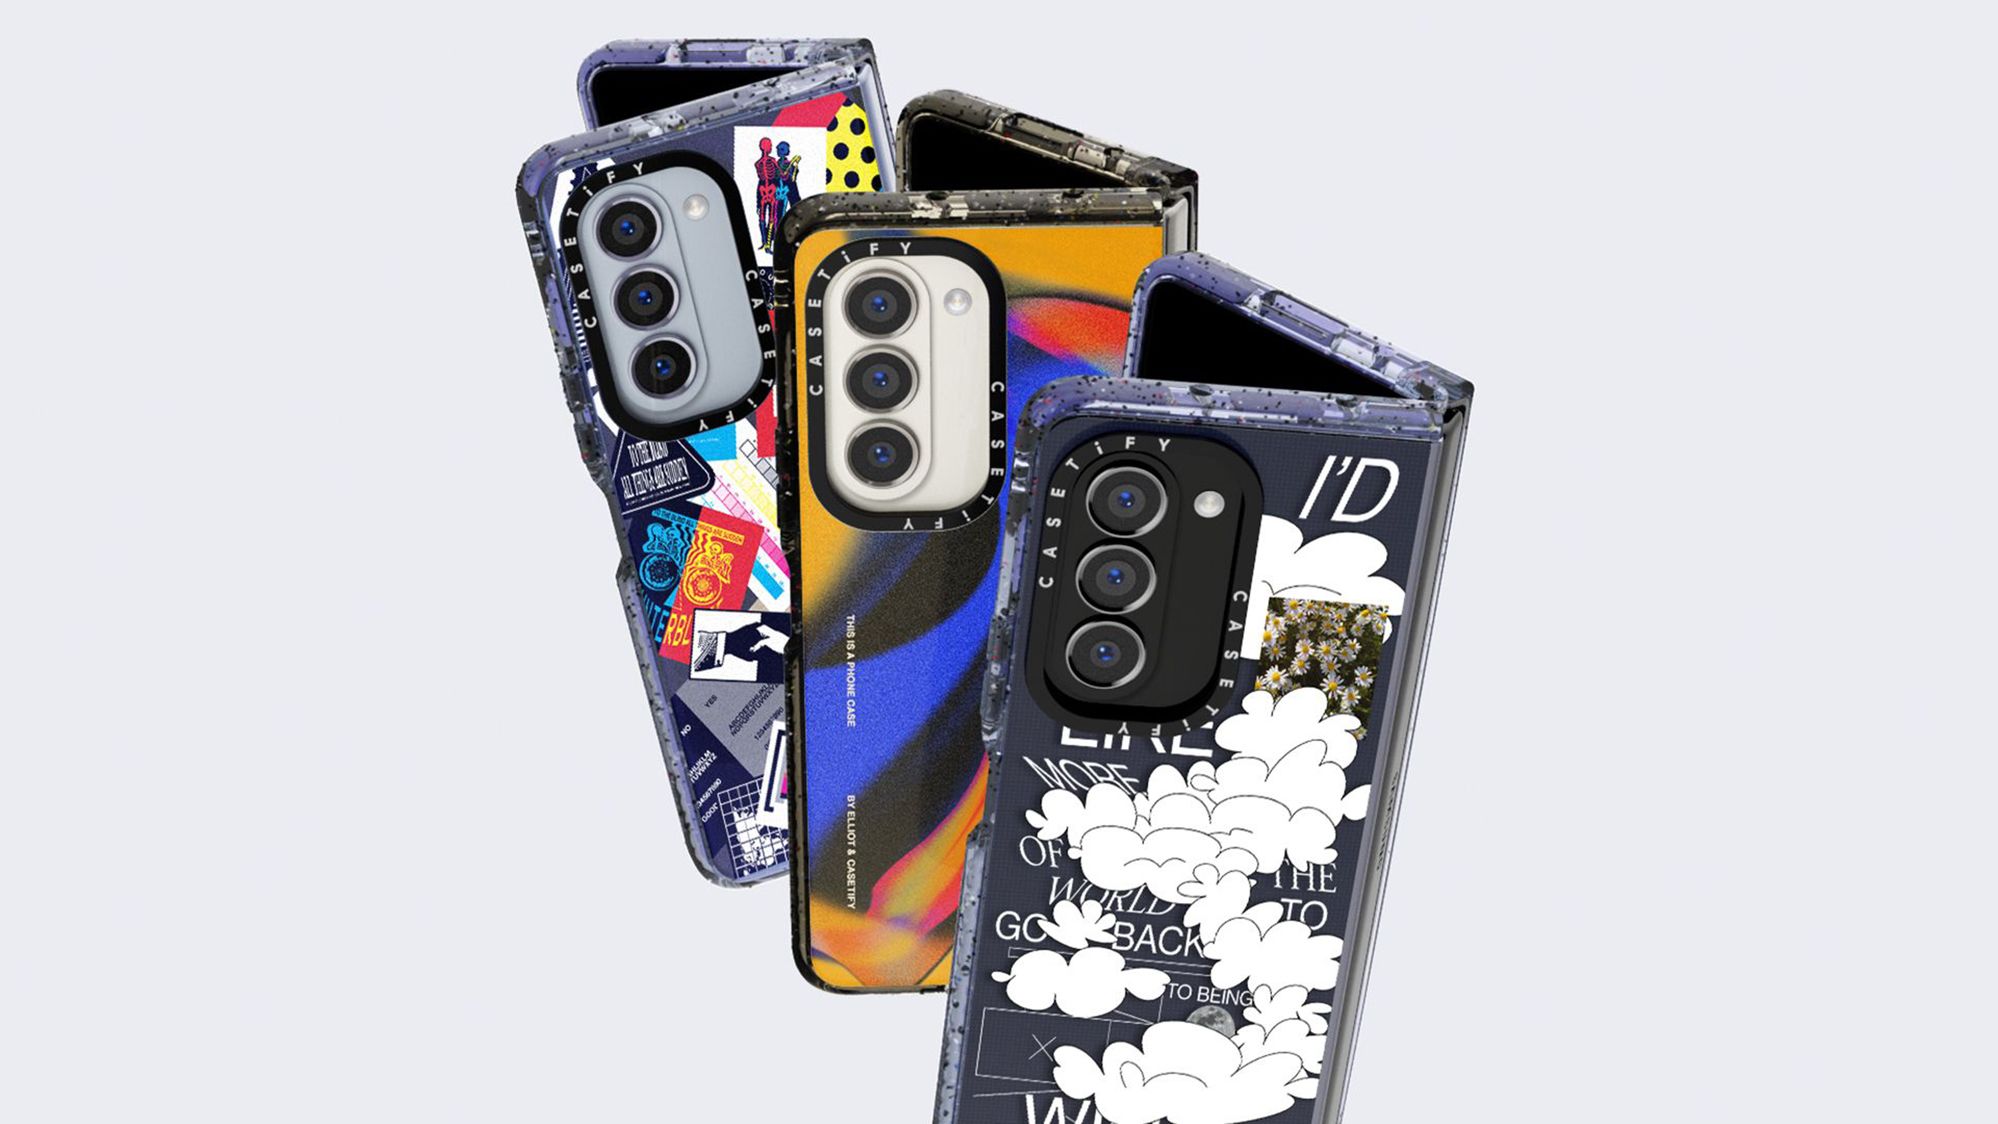 Samsung Galaxy Z Fold 5 Cases